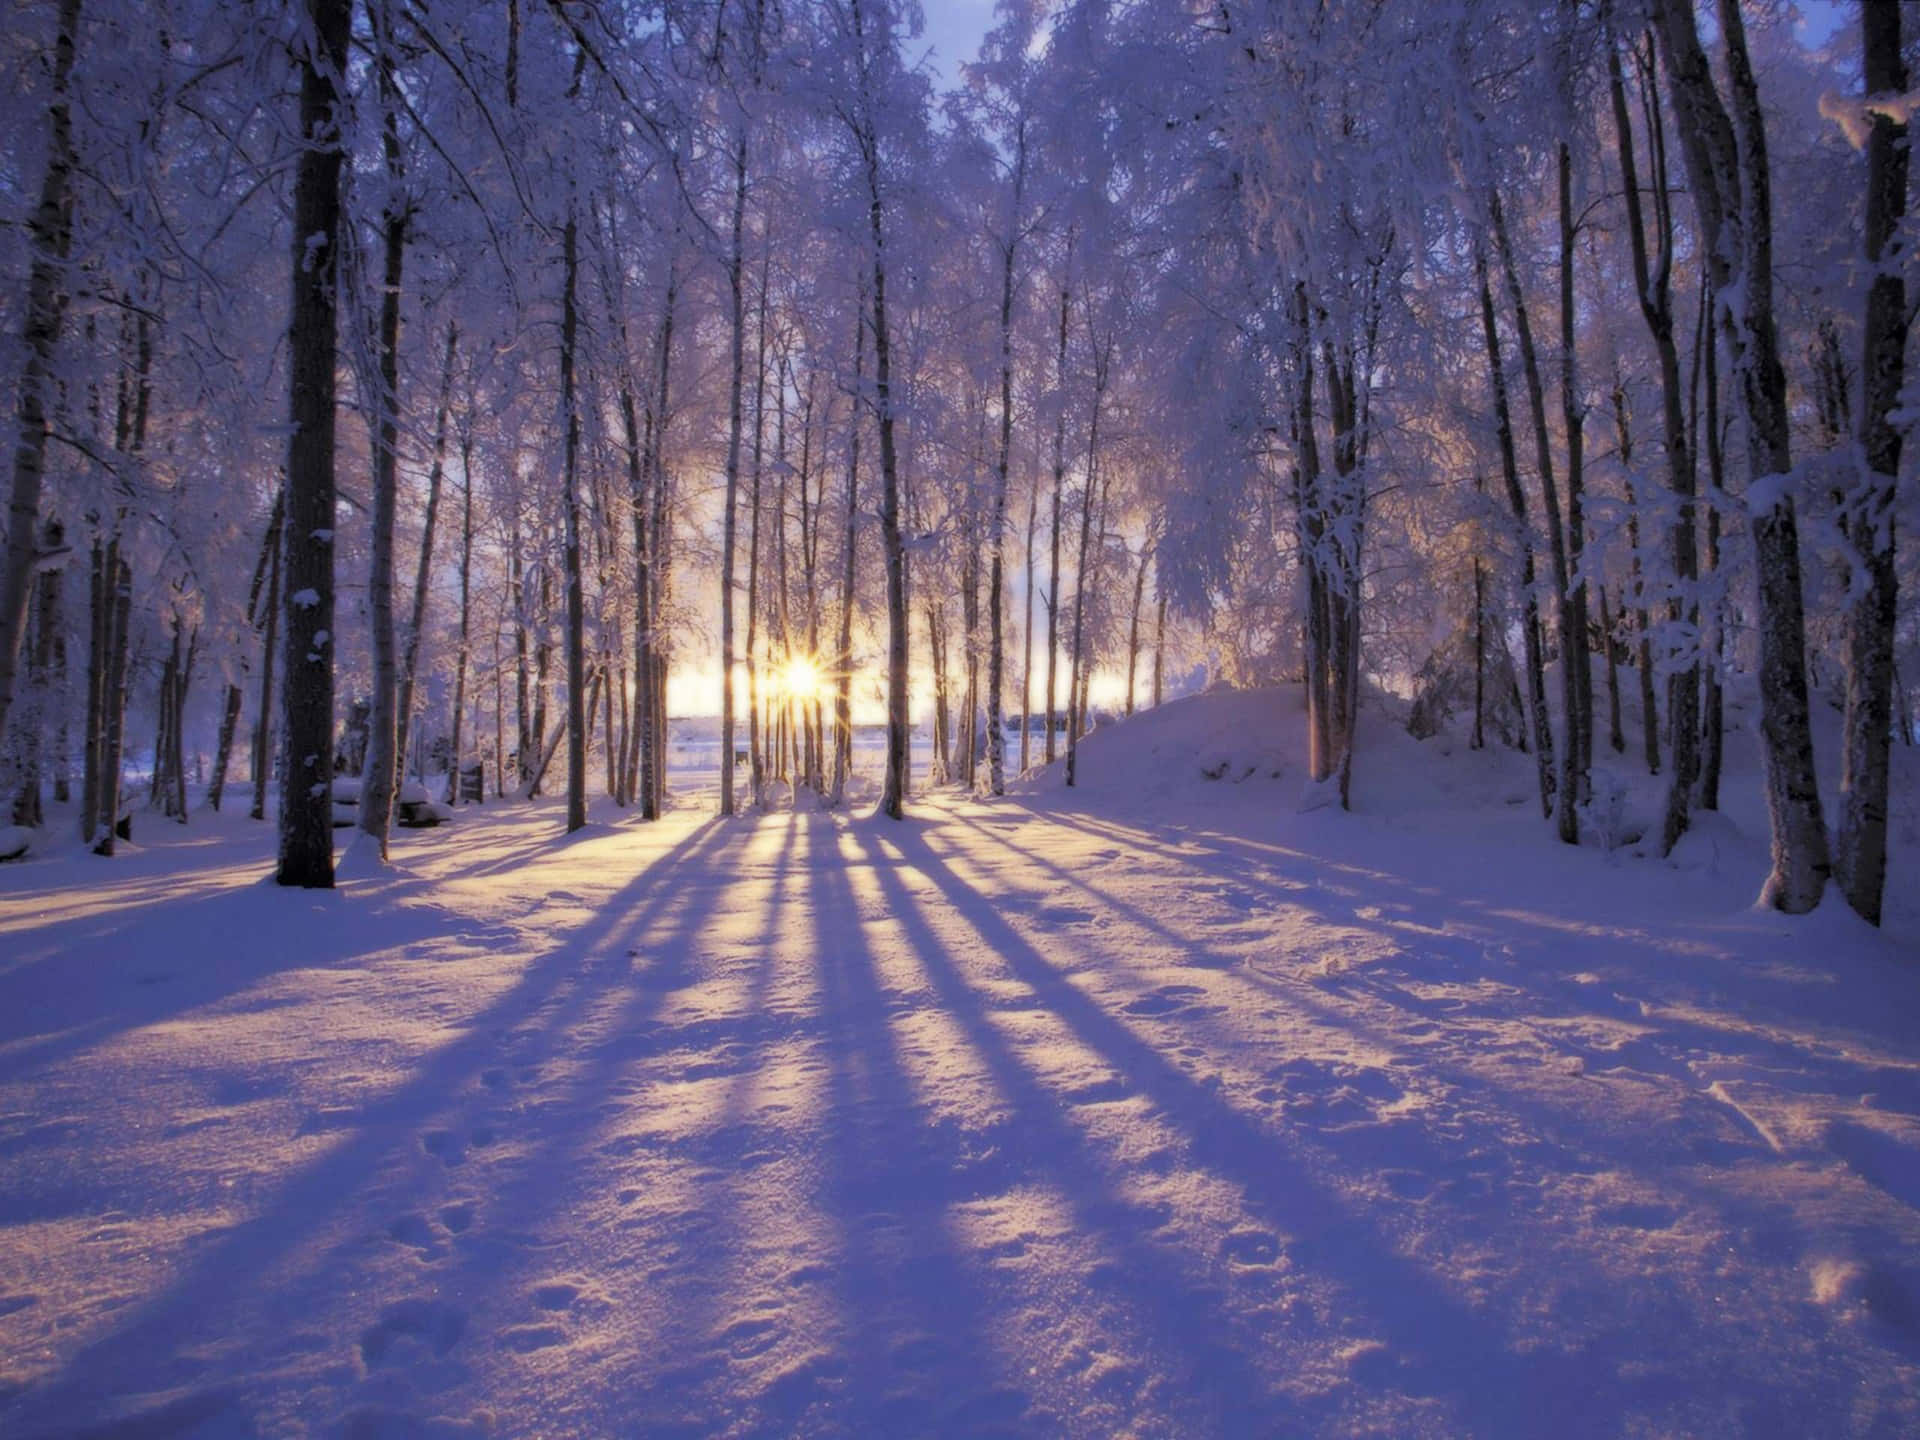 Enjoy A Snowy Winter Night From Your Desktop Wallpaper